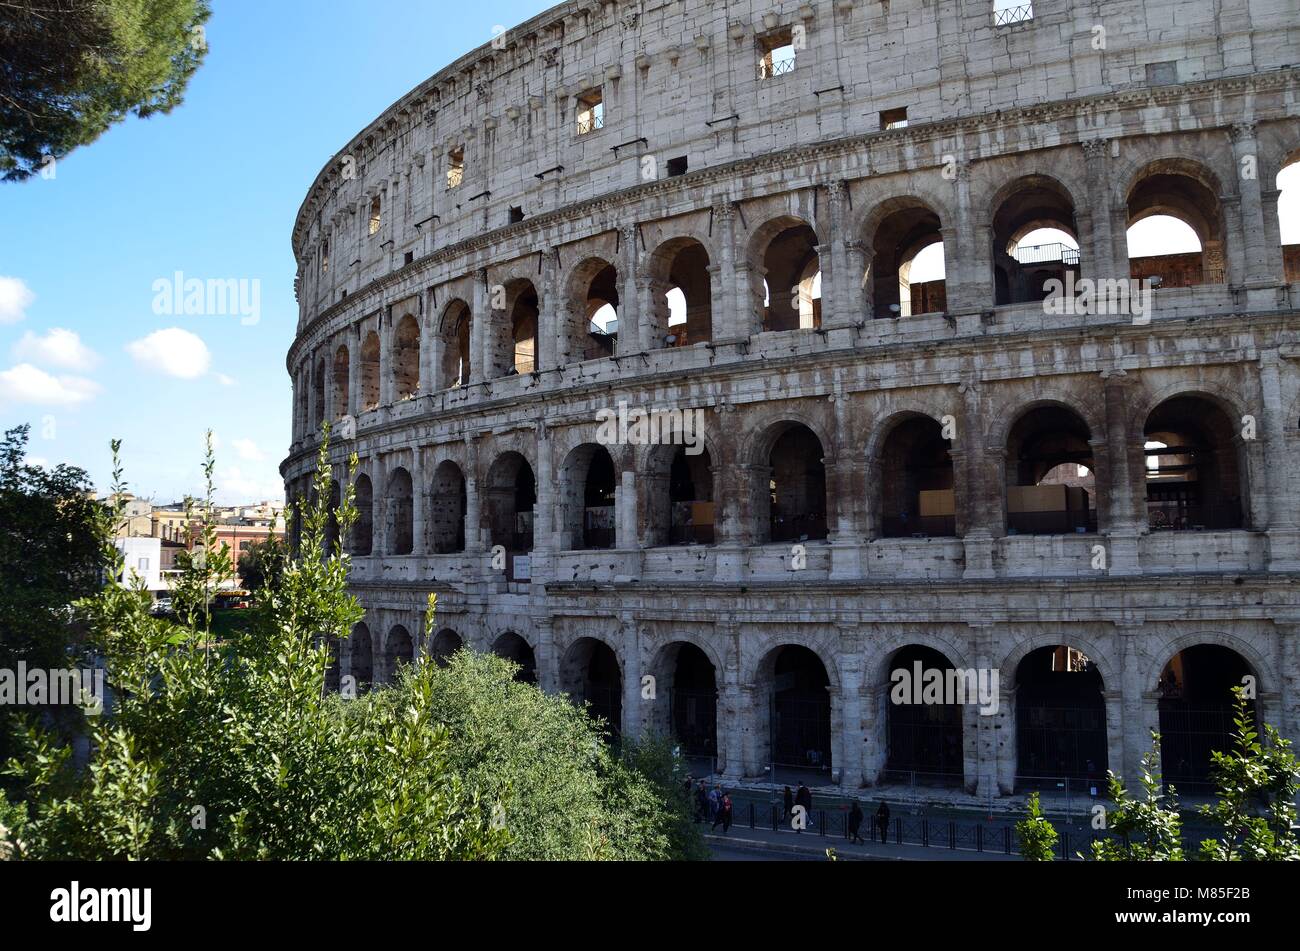 The Colosseum in Rome Stock Photo